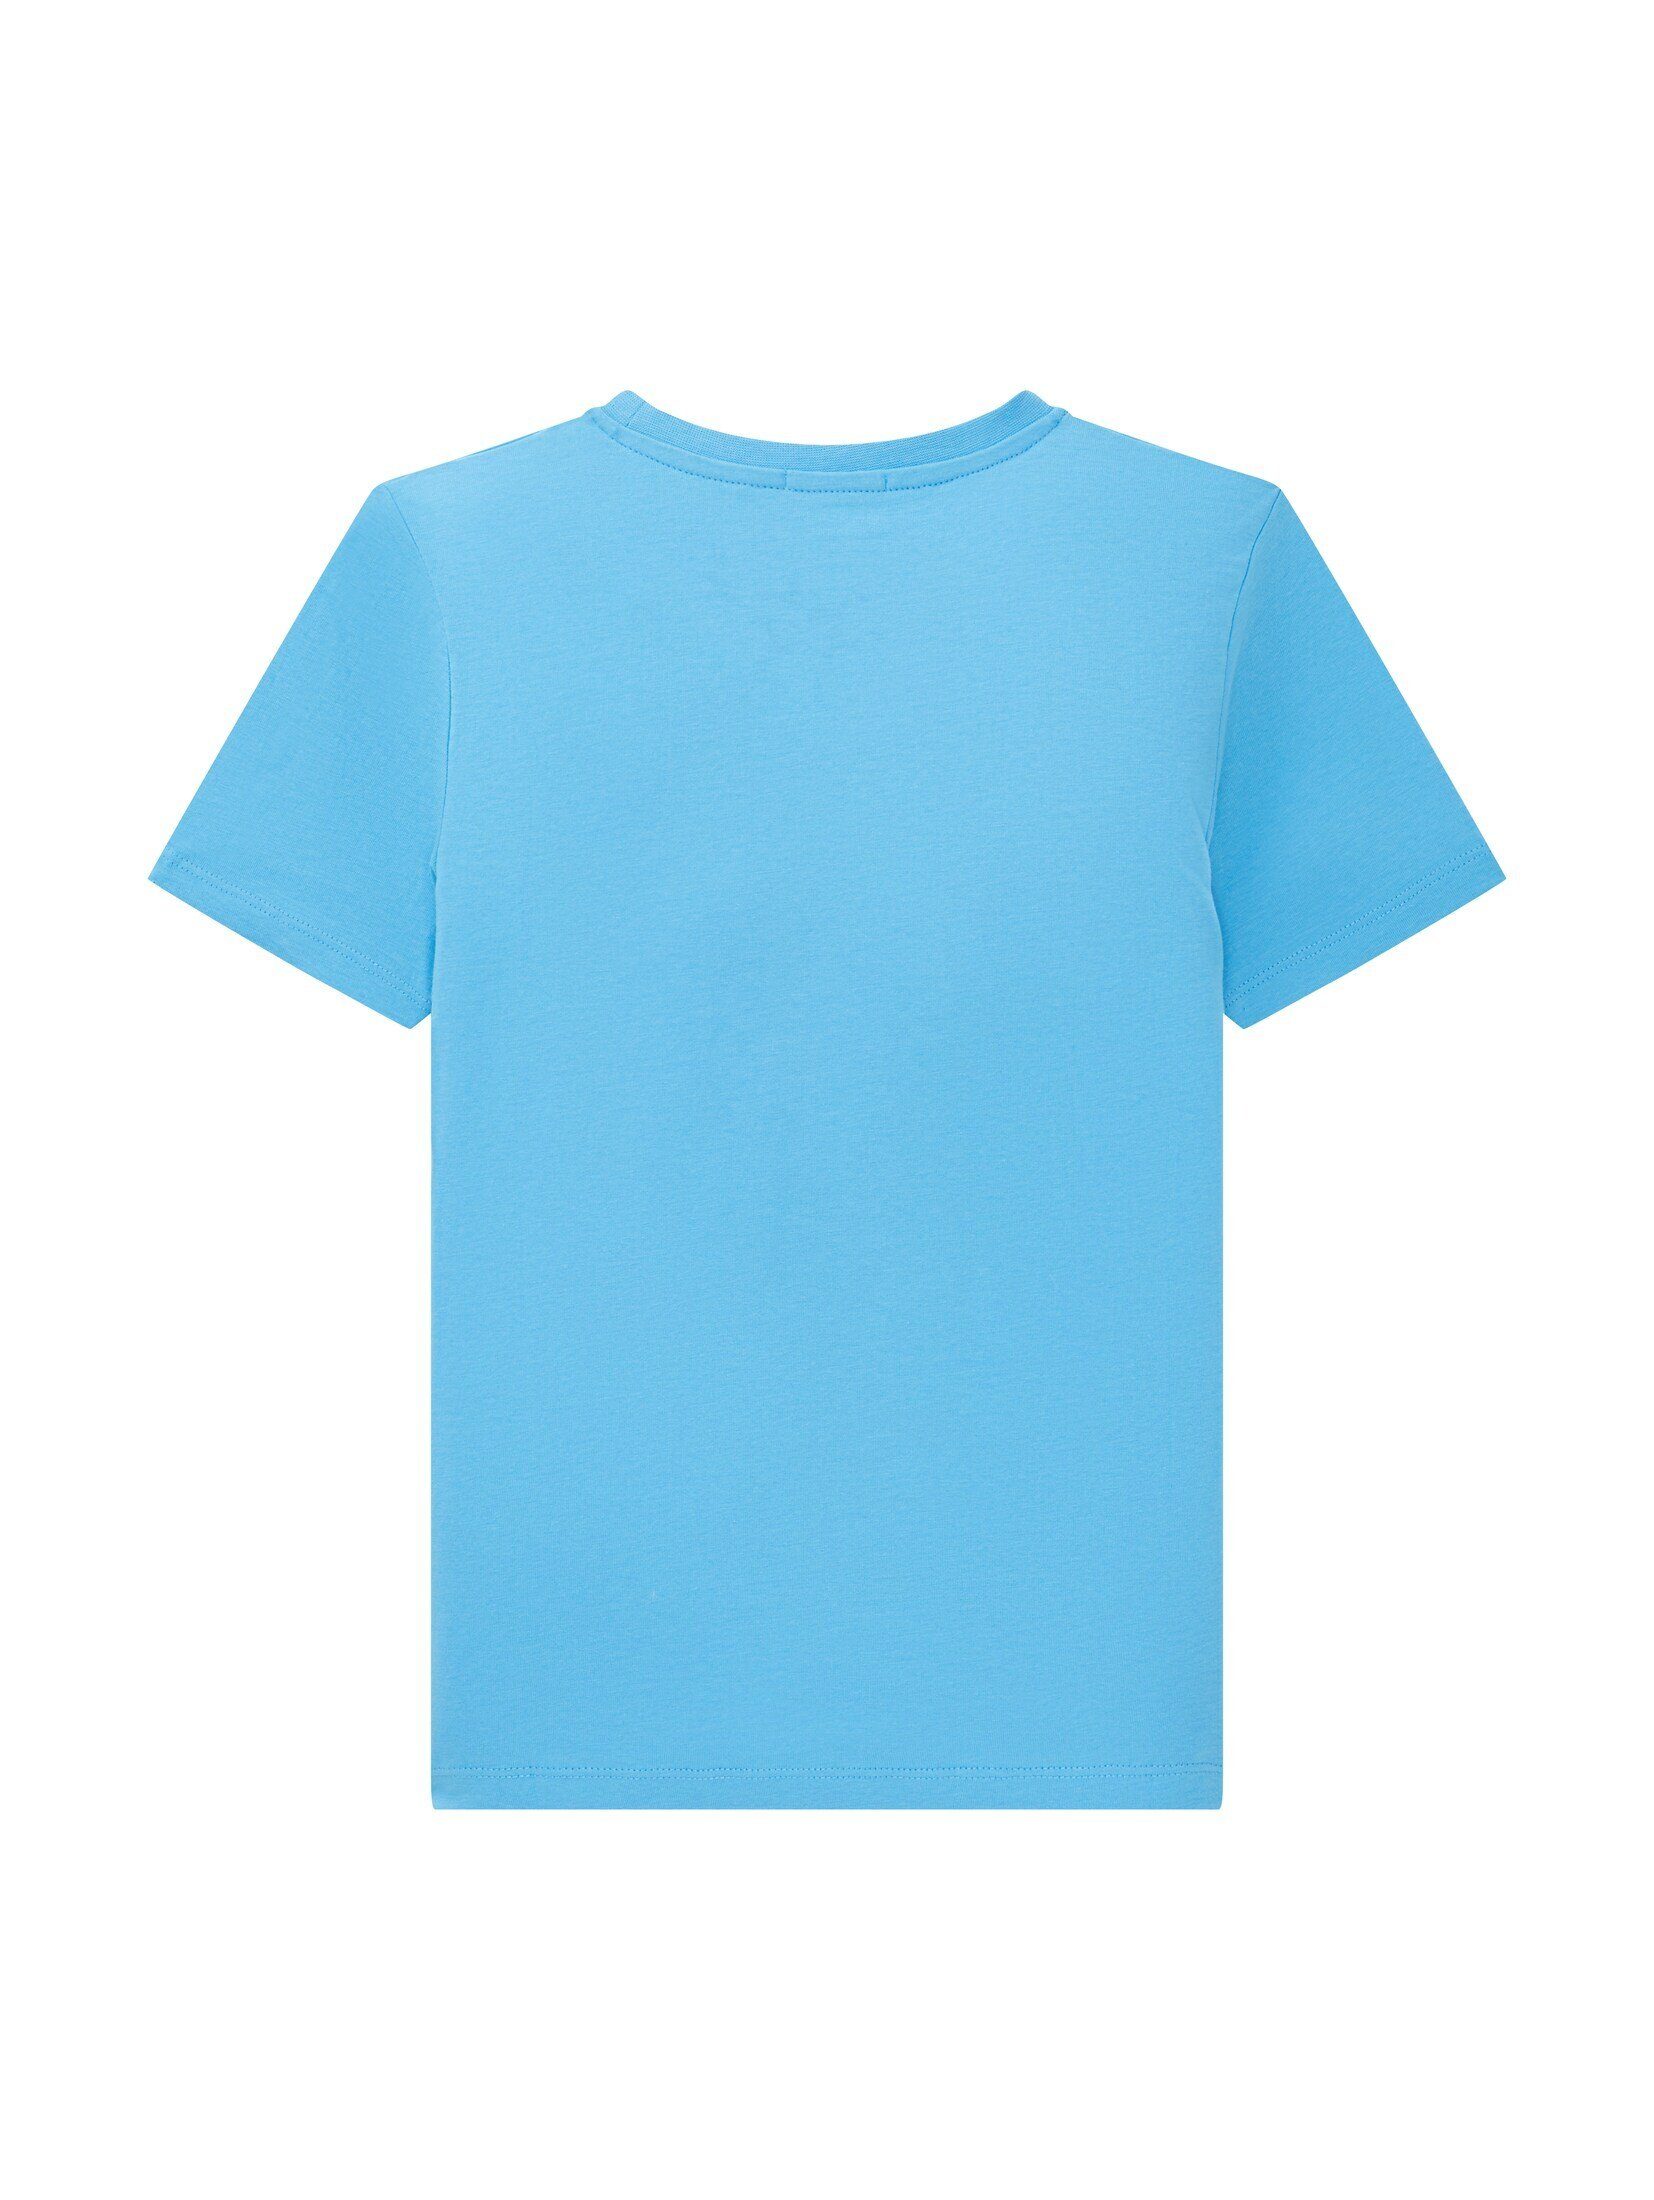 T-Shirt TAILOR T-Shirt sky TOM blue mit rainy Fotoprint